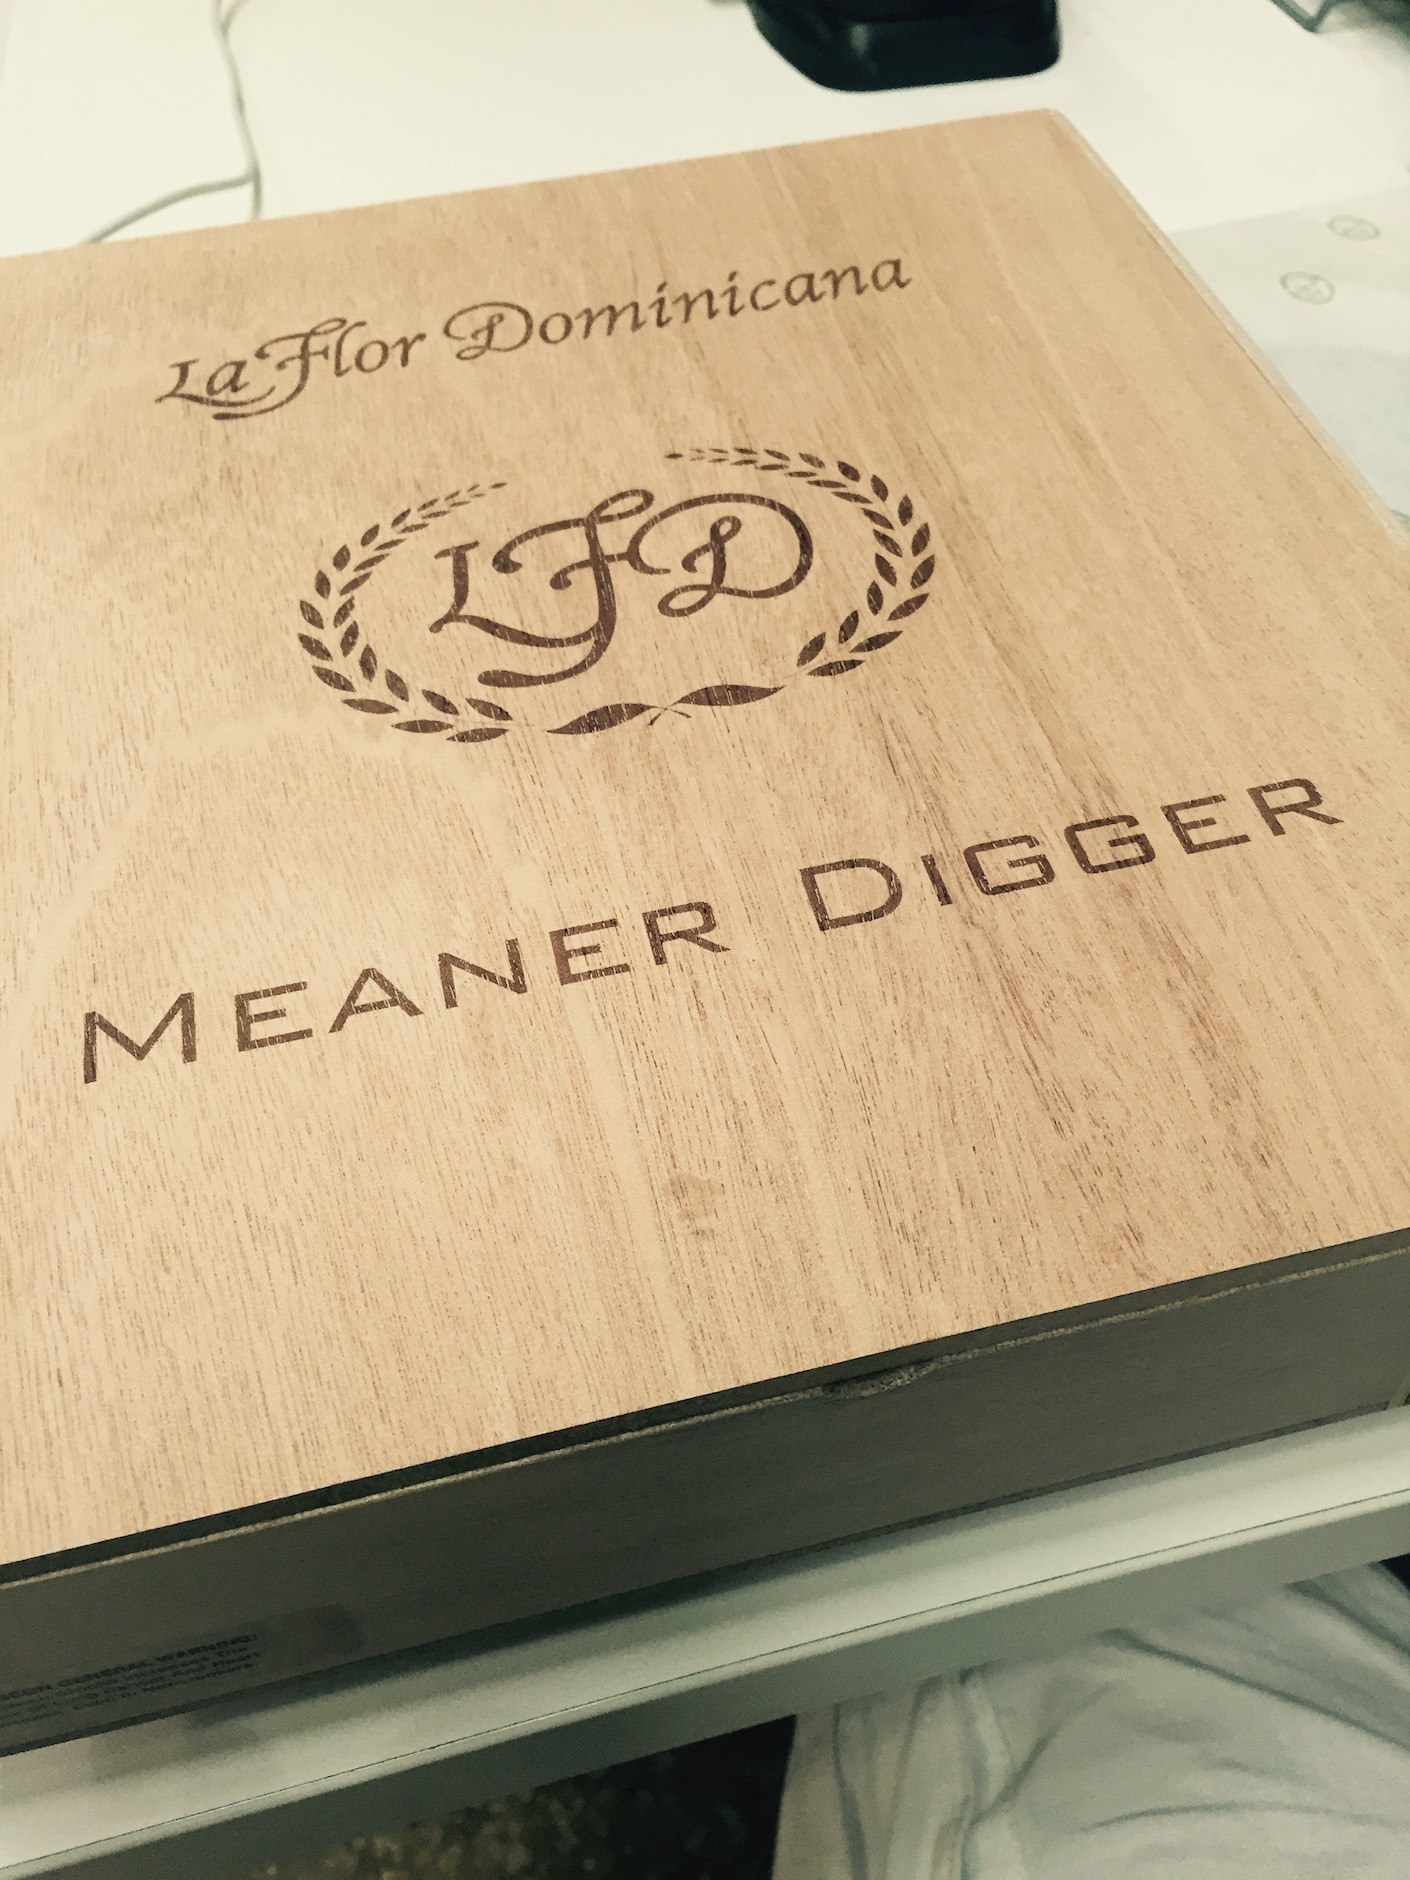 La Flor Dominicana Meaner Digger (2015)